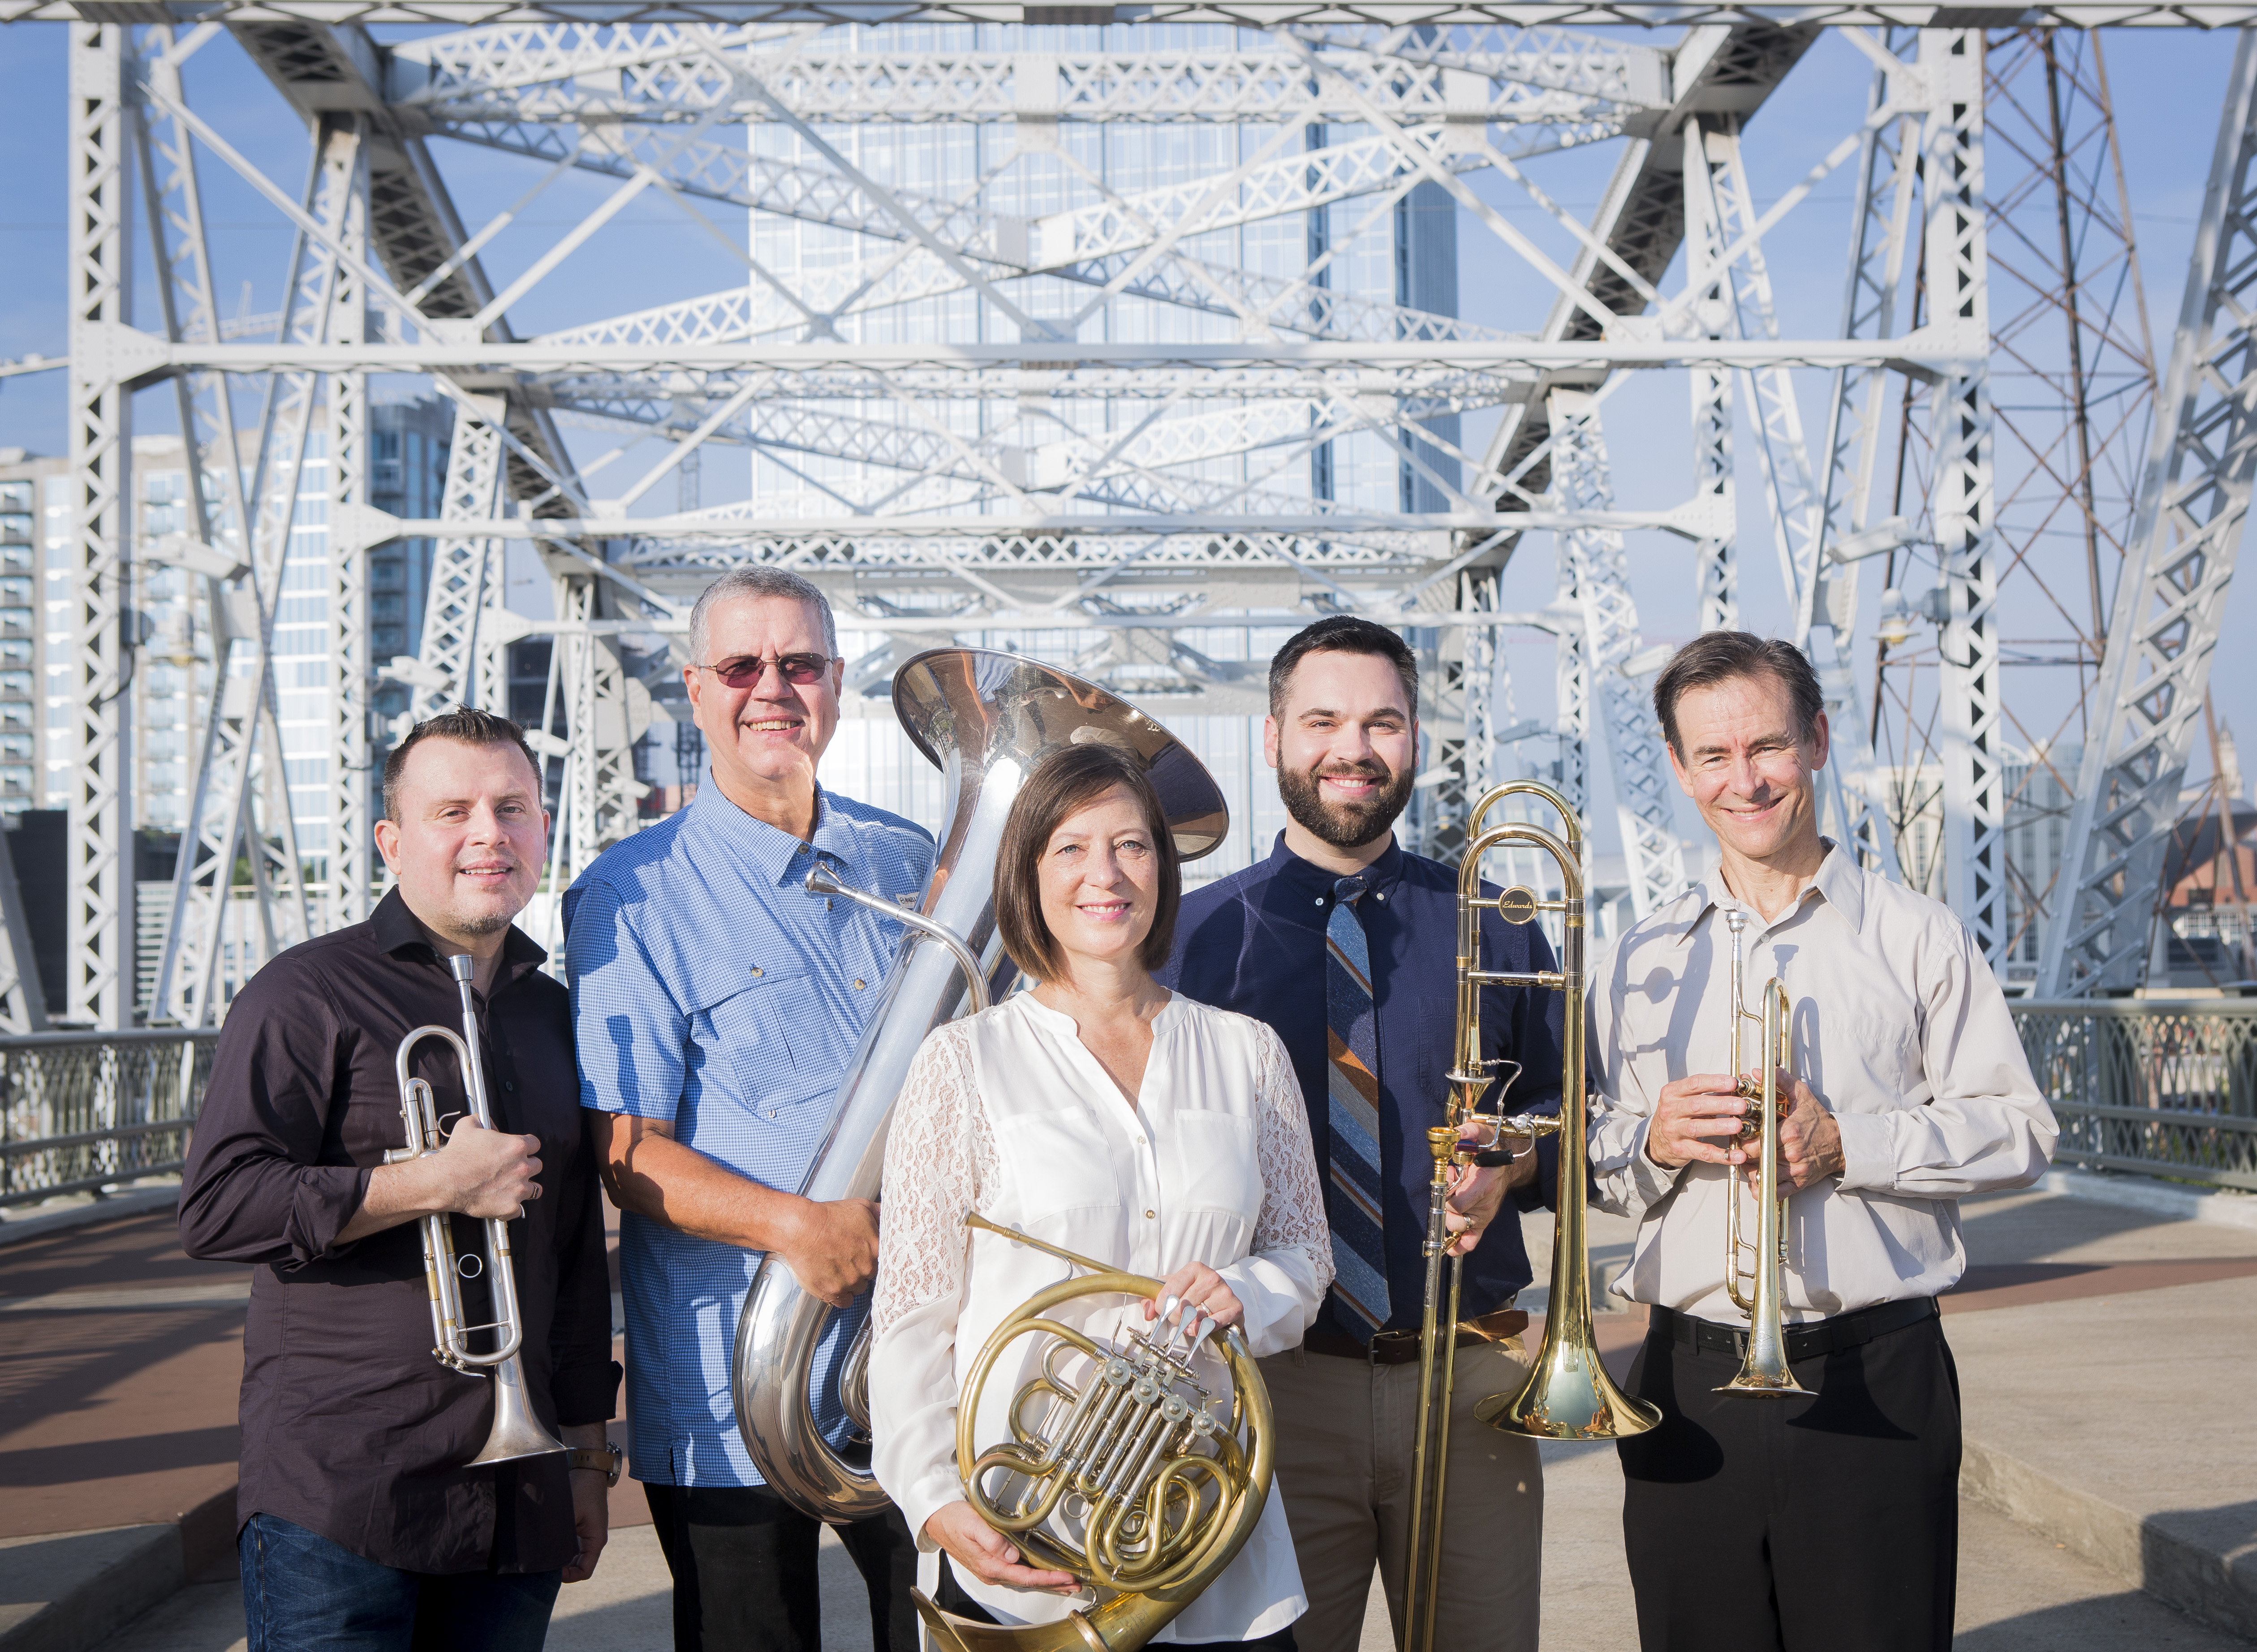 Blair Brass Quintet (Faculty Group) downtown
photos by: Susan Urmy